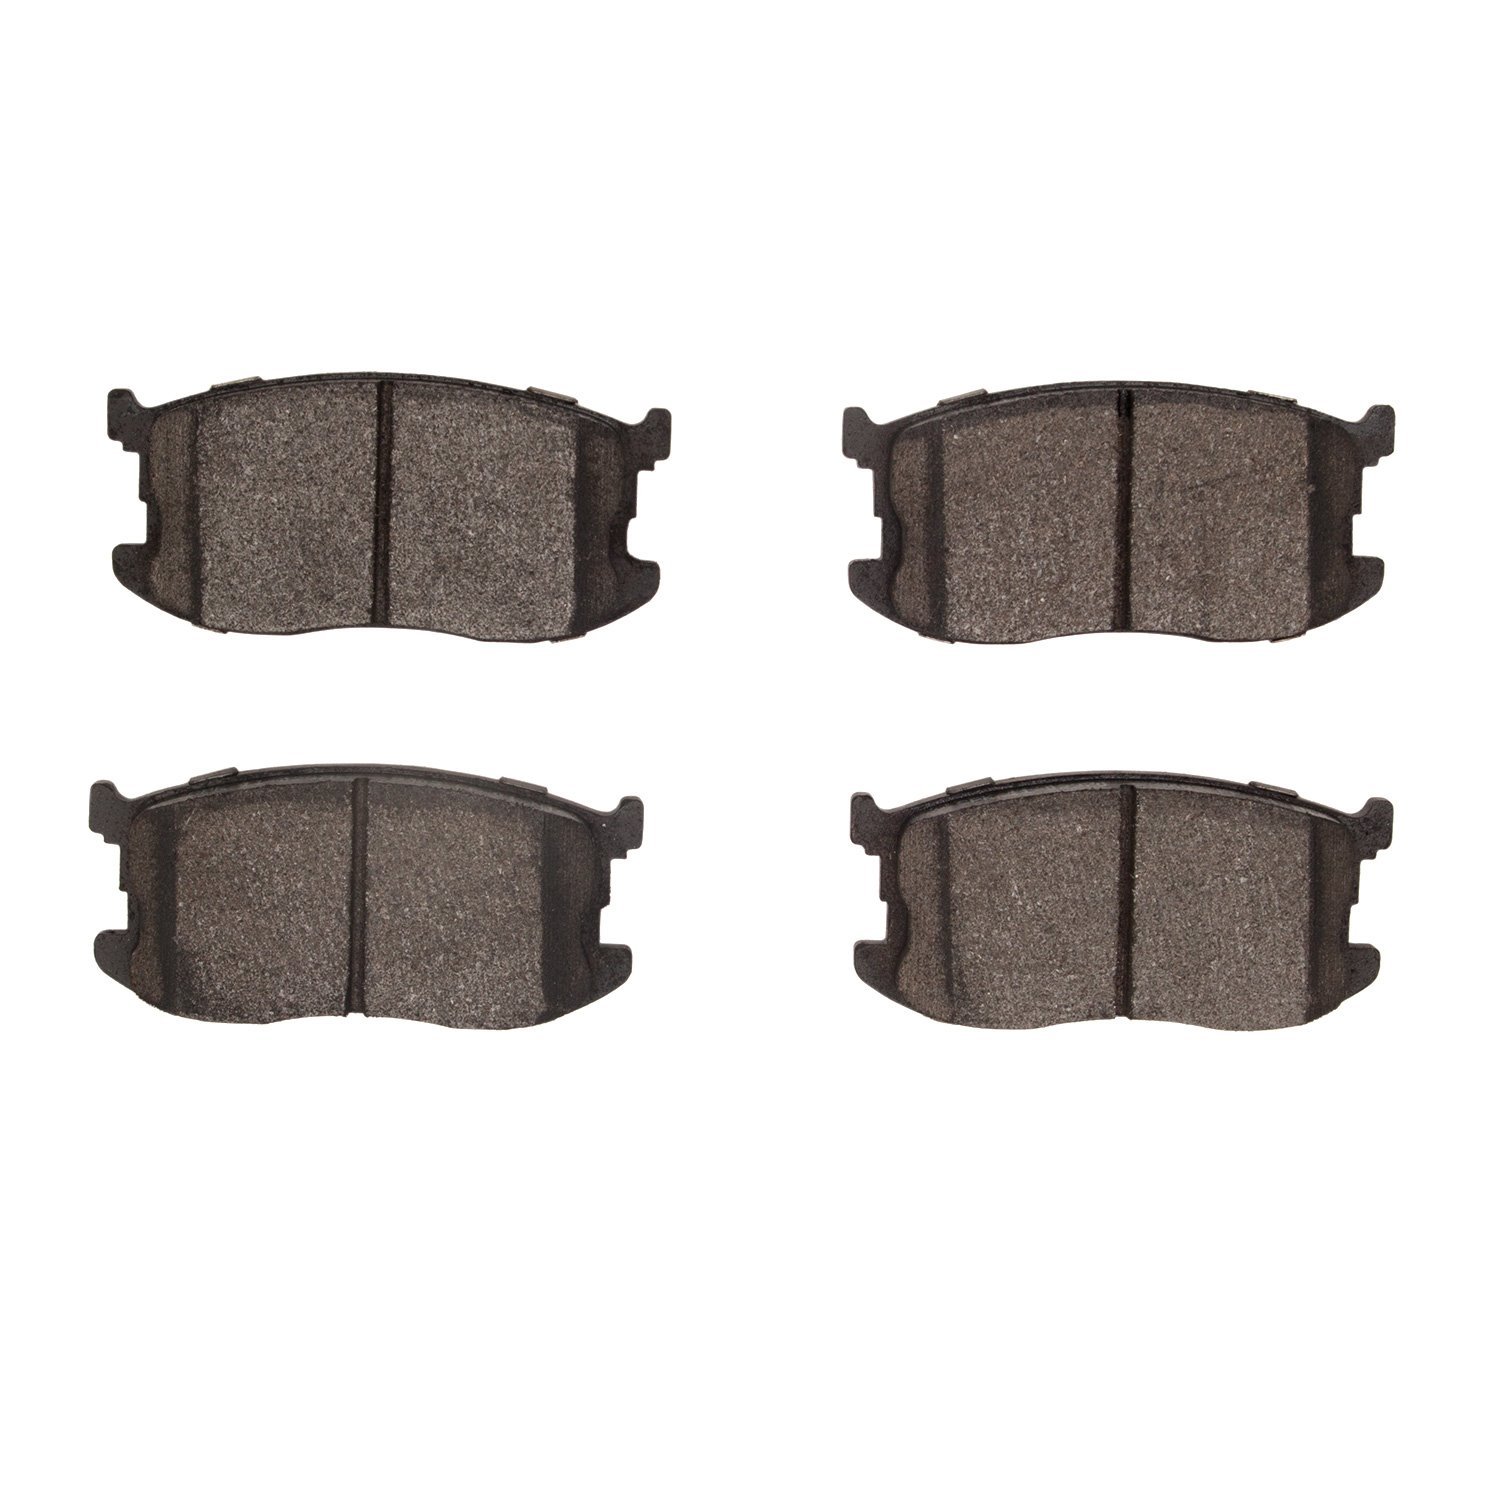 Semi-Metallic Brake Pads, 1981-1989 Fits Multiple Makes/Models, Position: Front